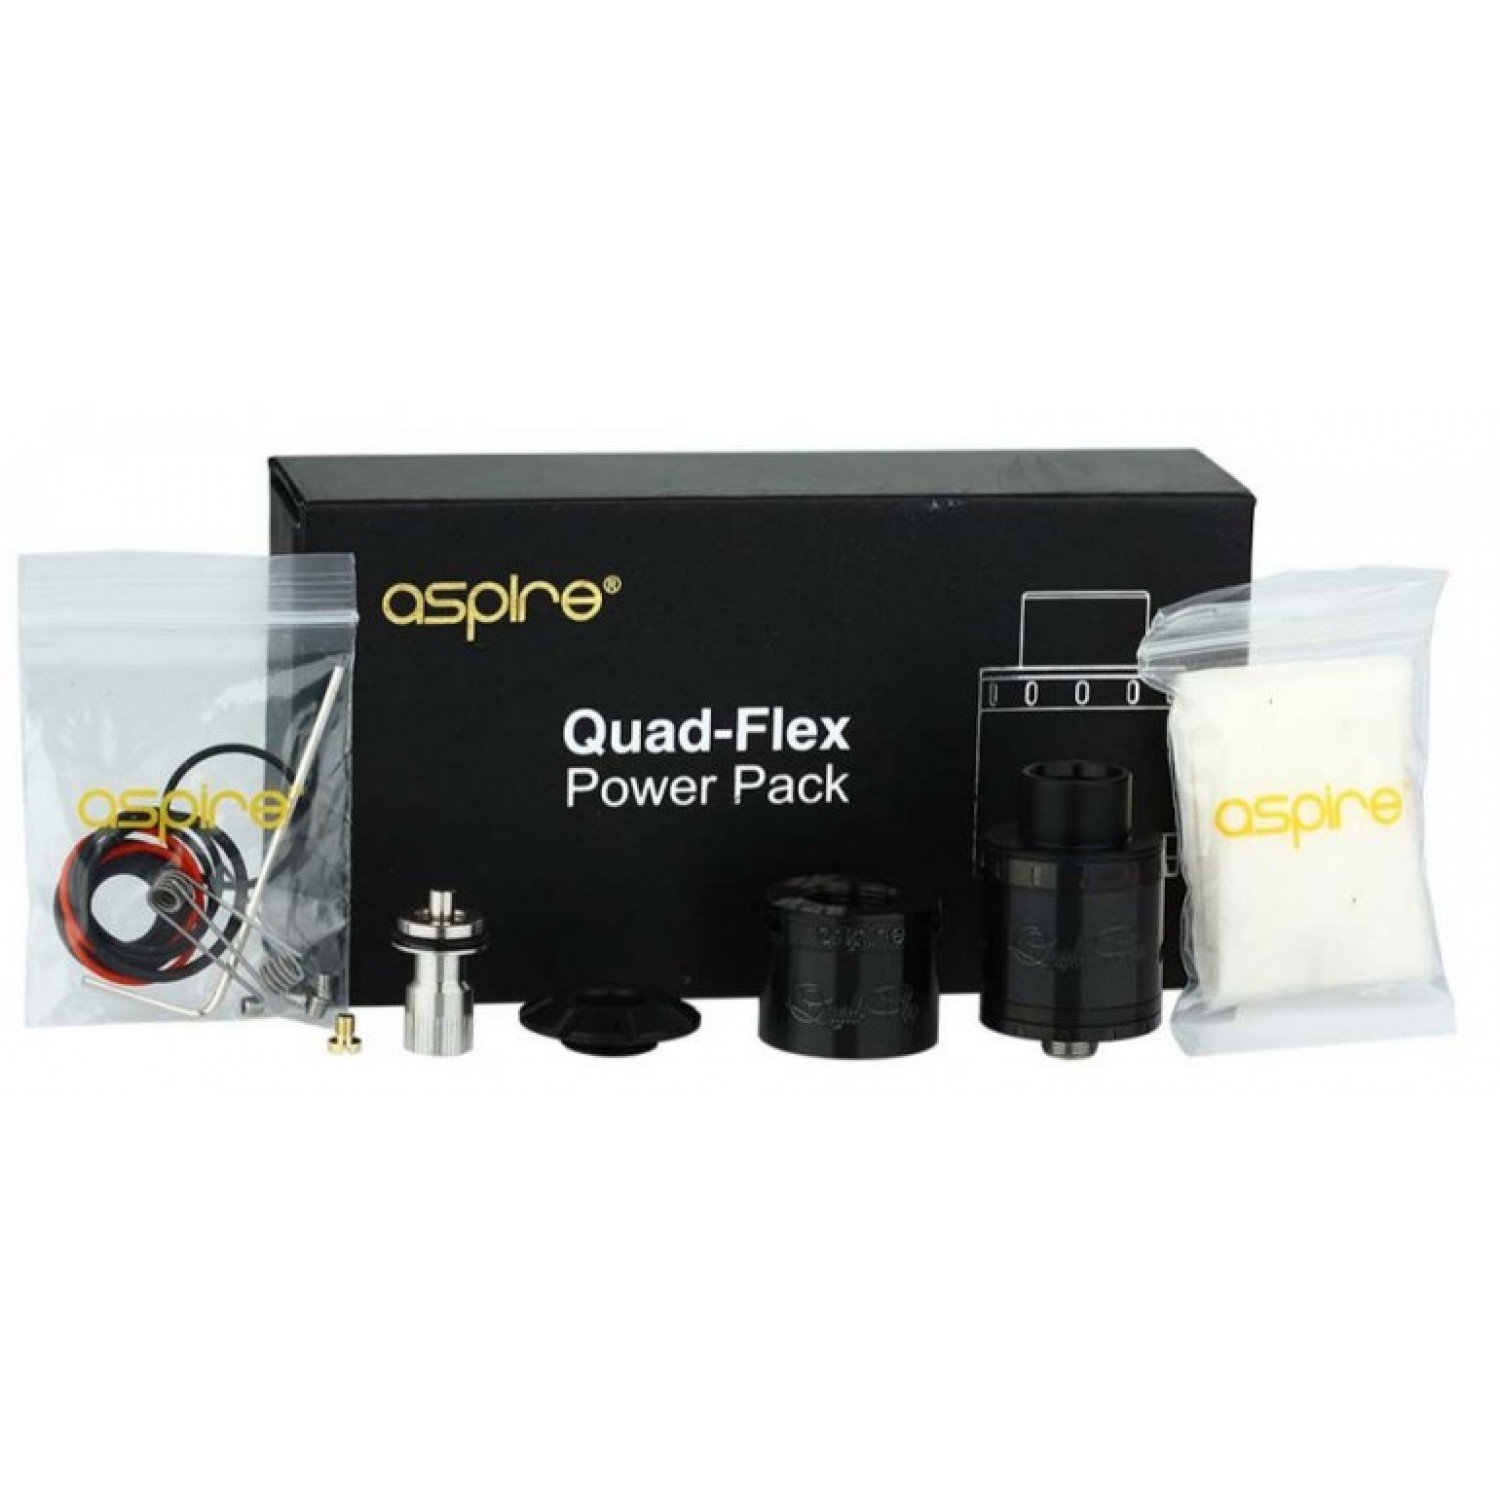 Aspire - Quad-Flex Power Pack Rda Elektronik sigara Atomizer